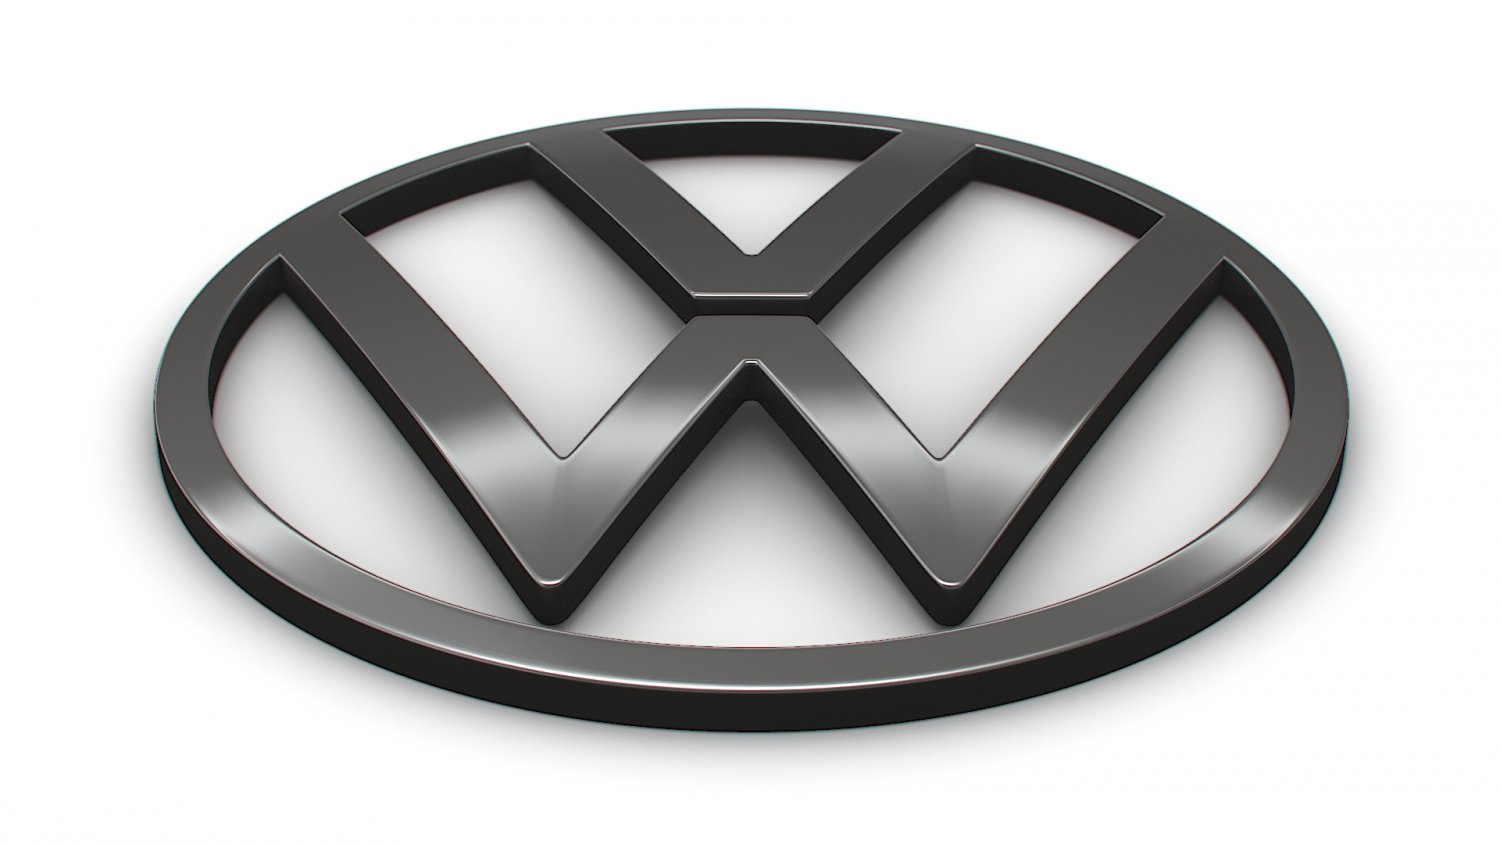 GB : Logo Volkswagen / FR : Logo Volkswagen by Arash68, Download free STL  model